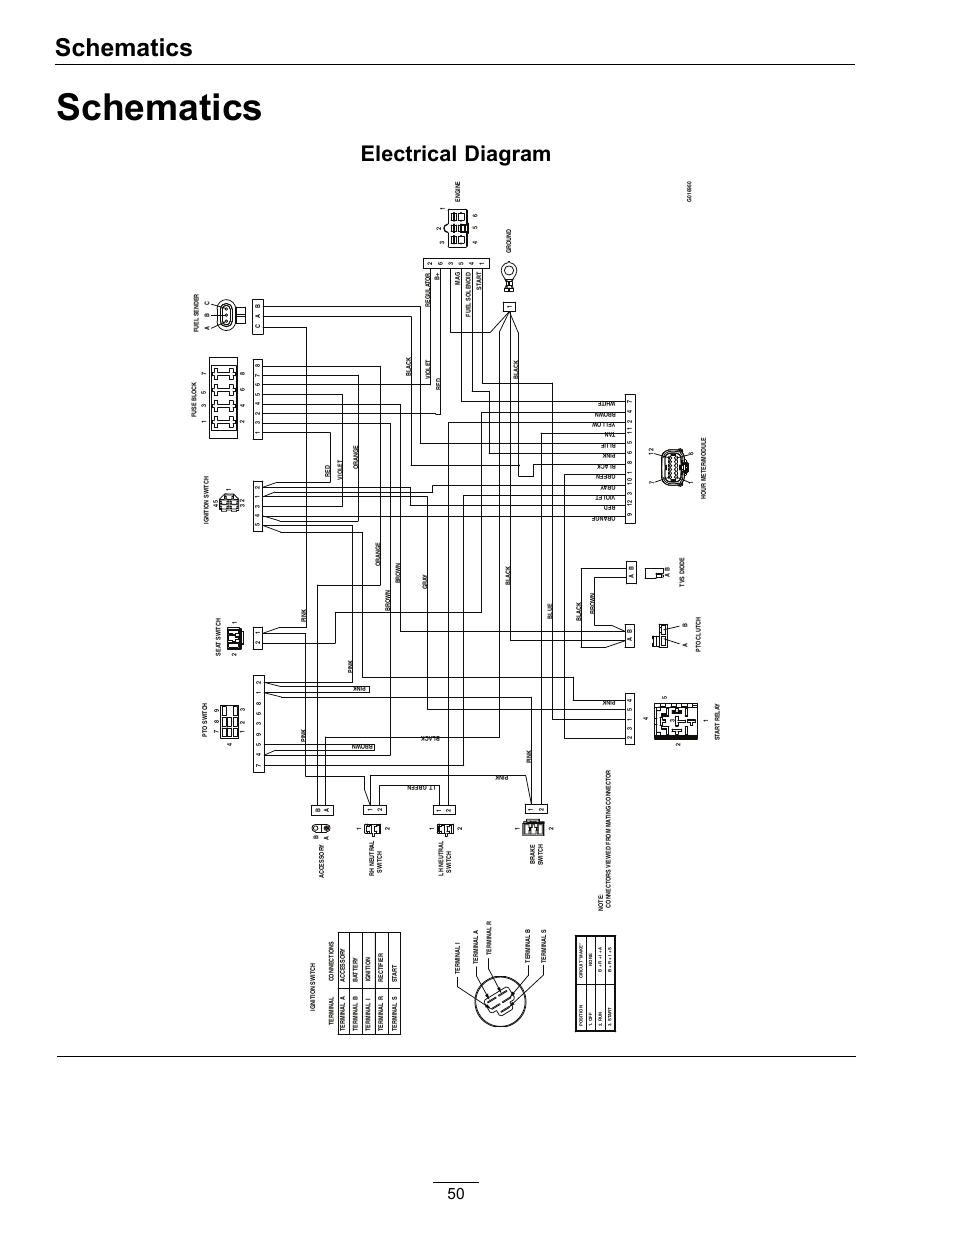 maglock wiring diagram with break glass